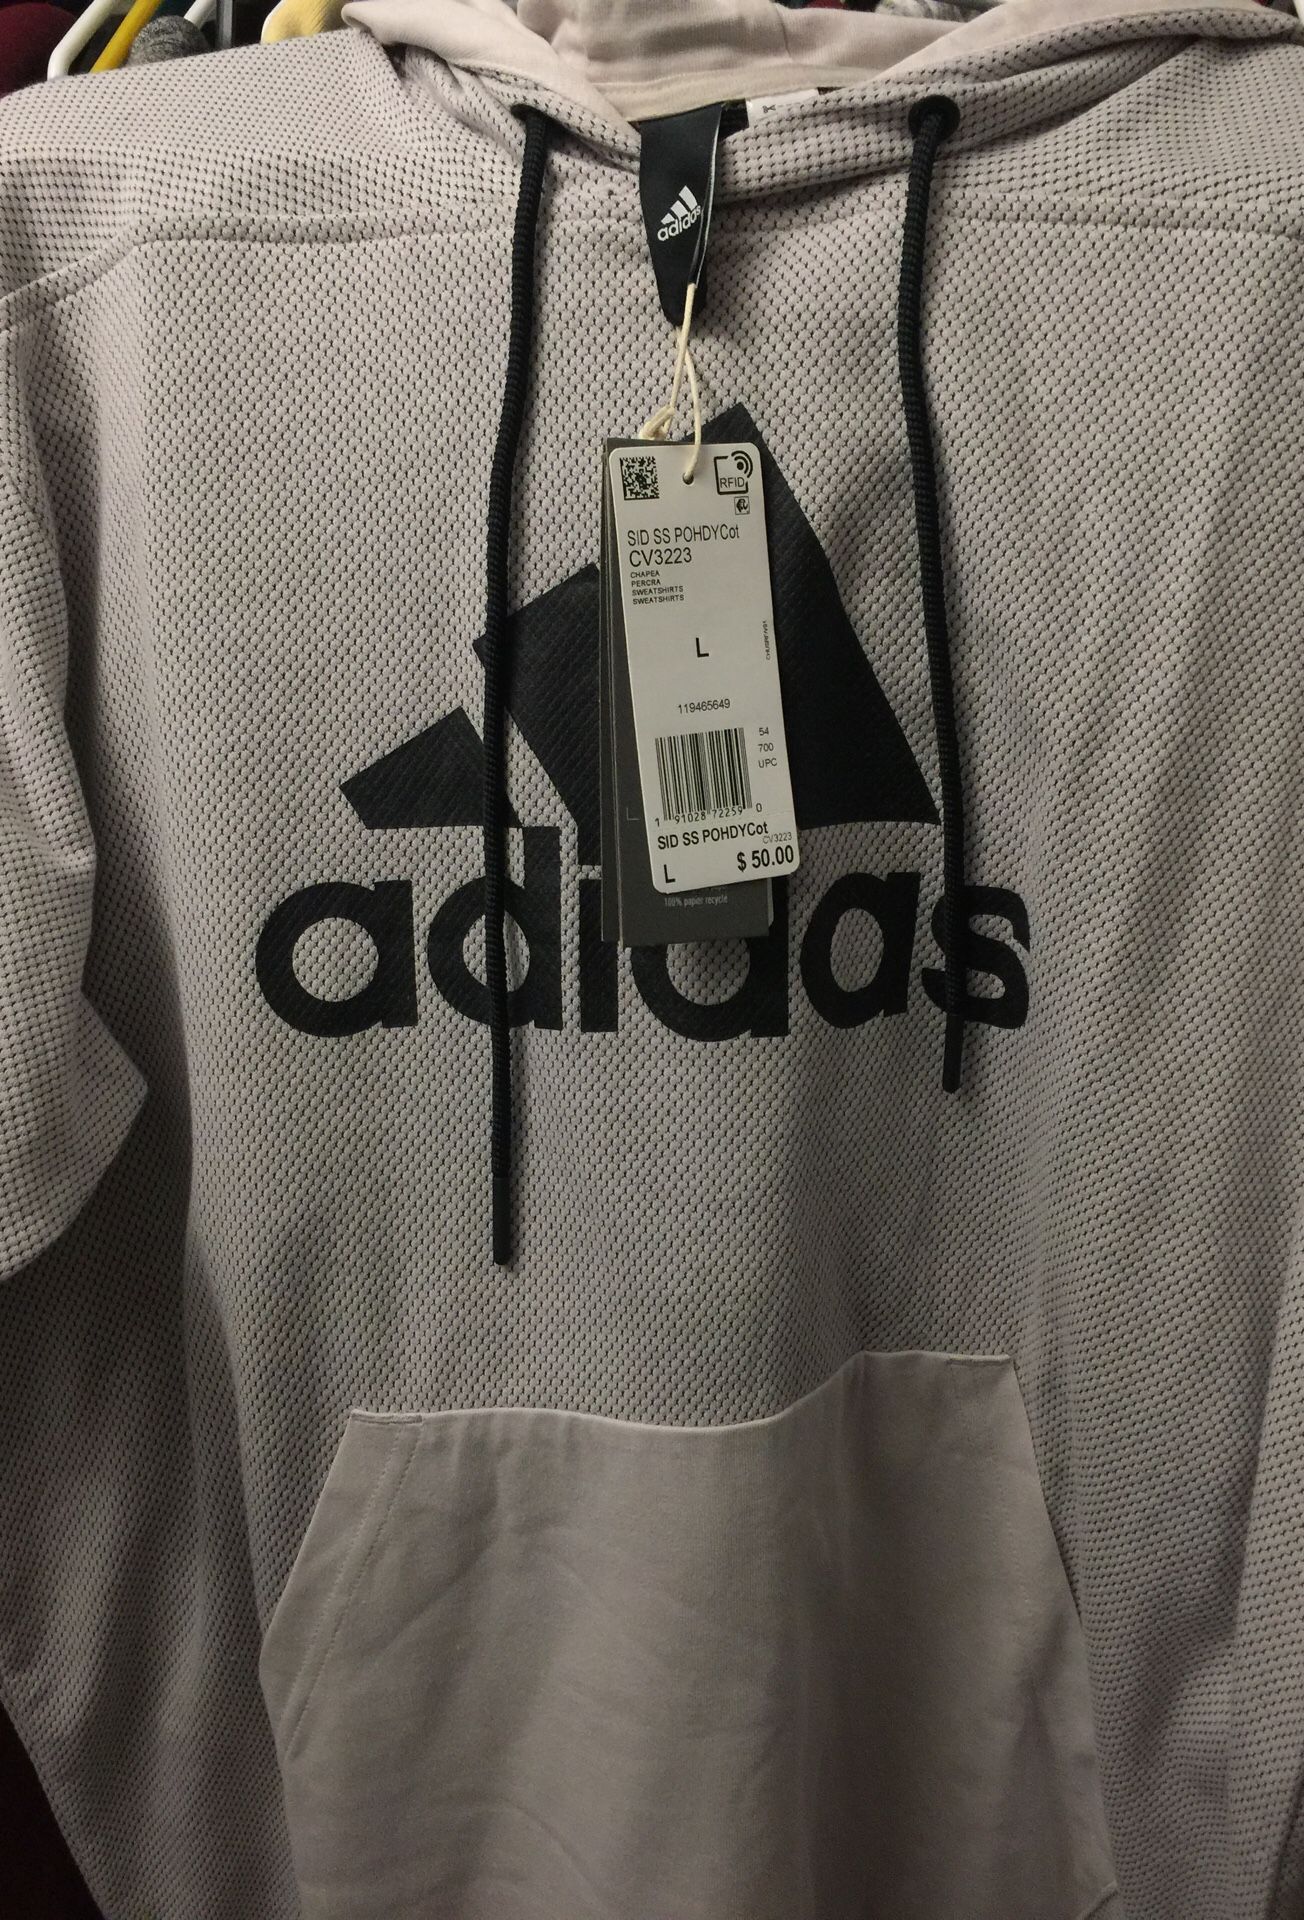 Adidas hoodie size large